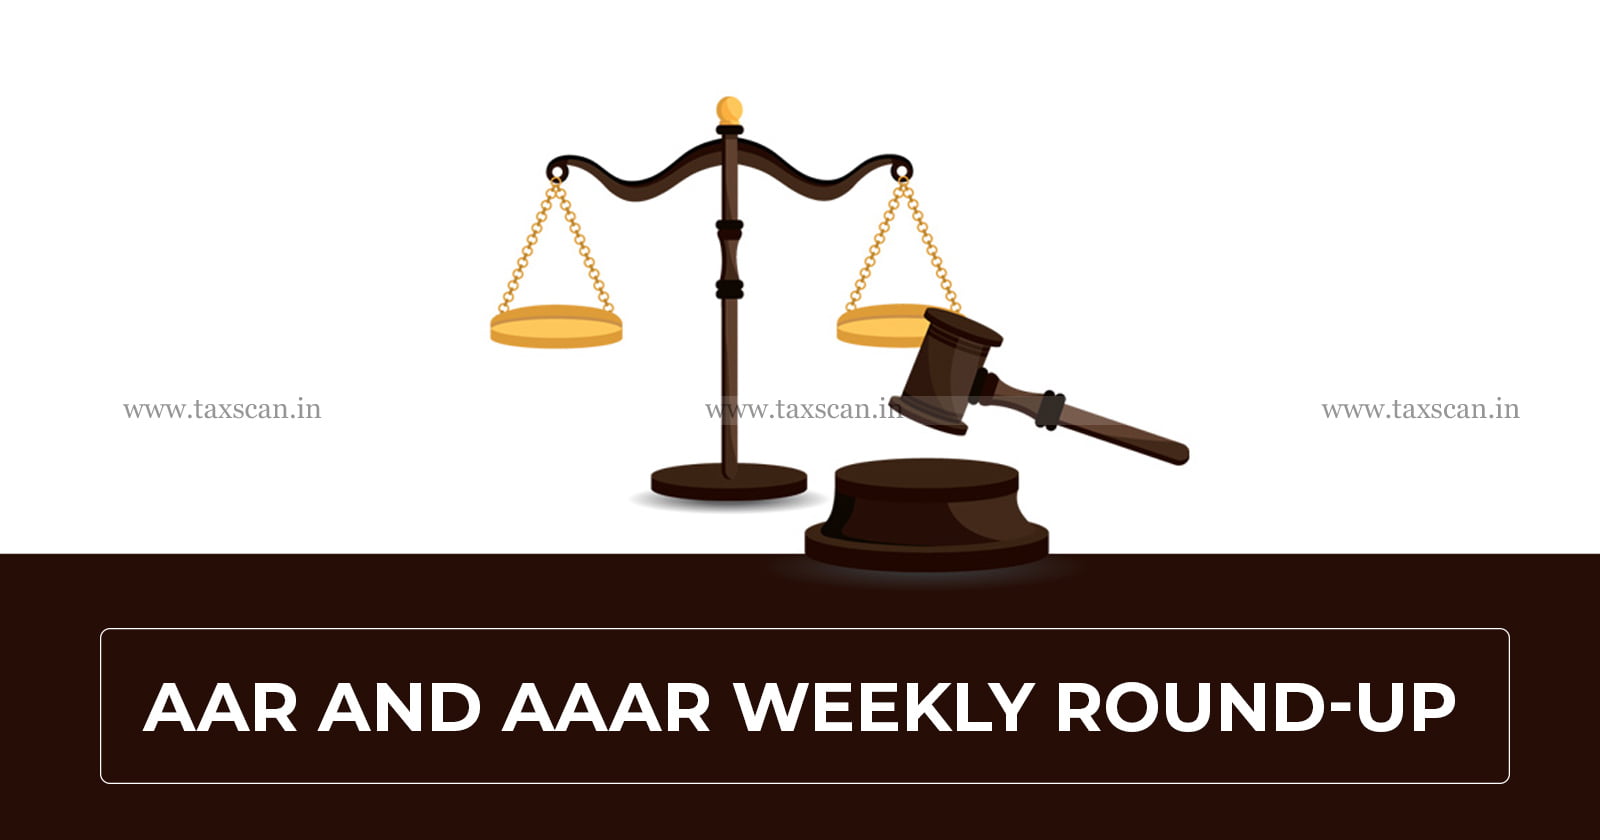 AAR and AAAR Weekly Round Up - GST - AAR and AAAR weekly news - AAR weekly round up - TAXSCAN